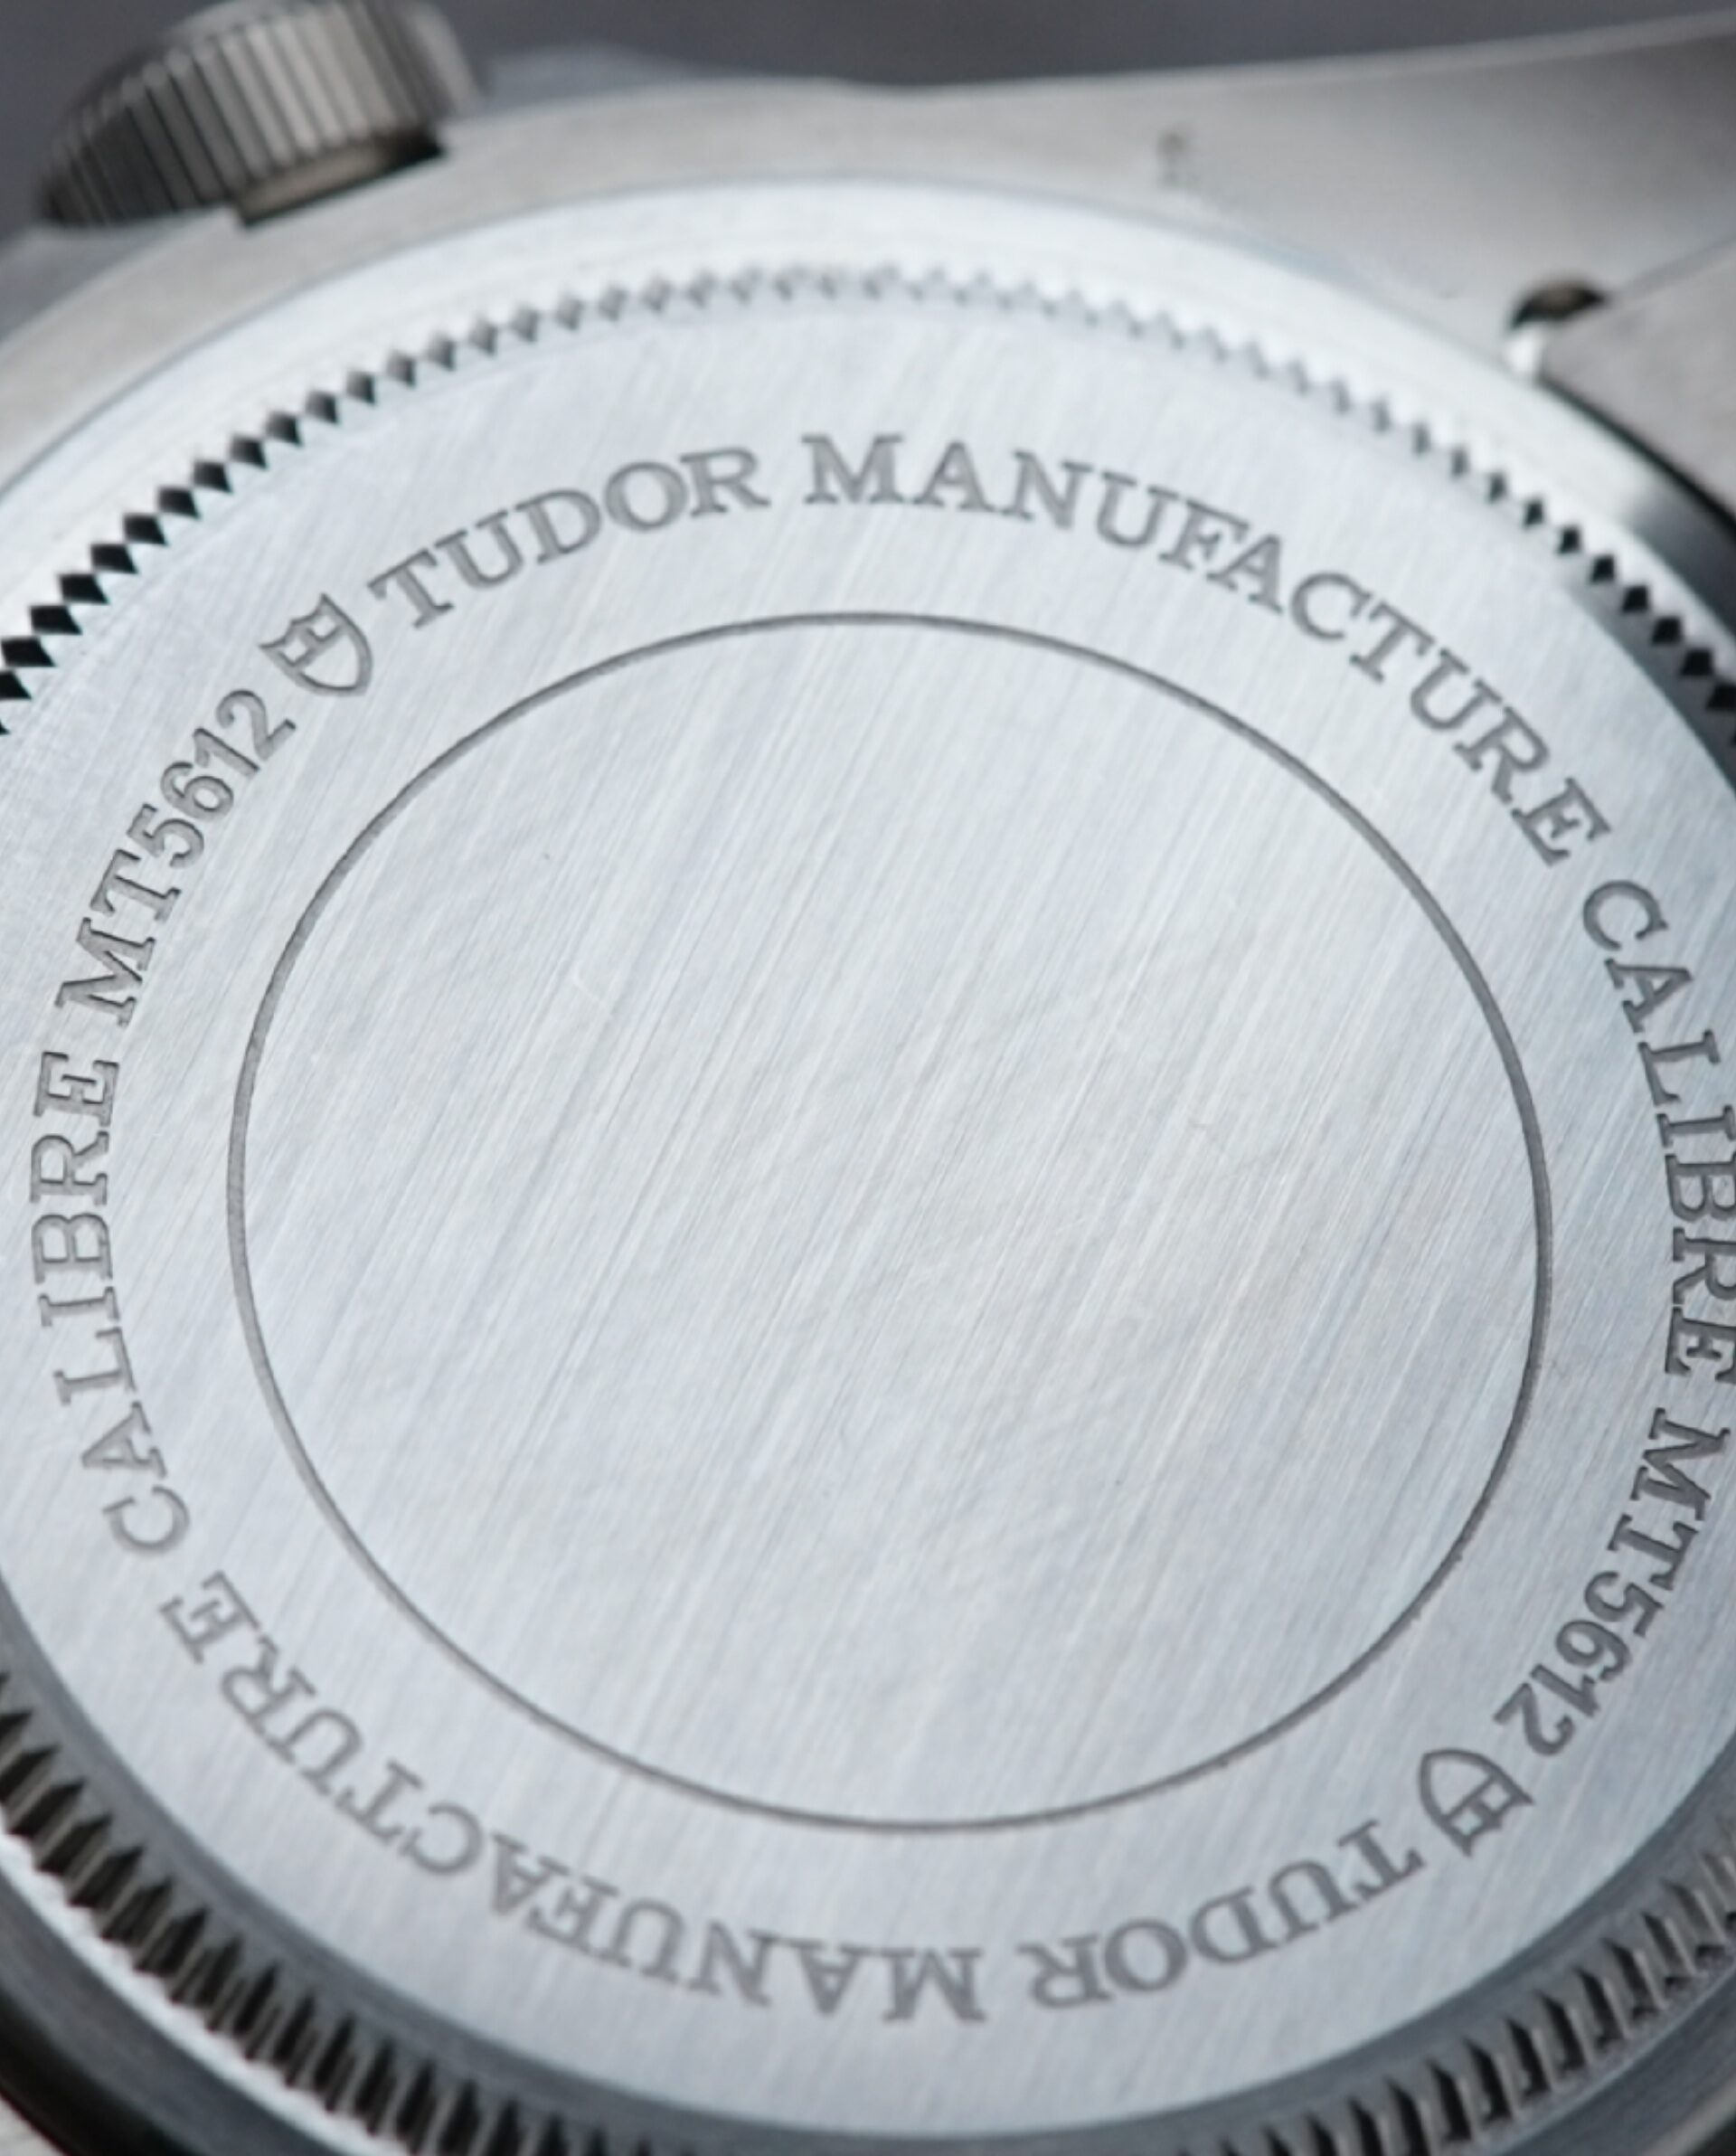 Caseback of the Tudor Pelagos 25600TN watch.